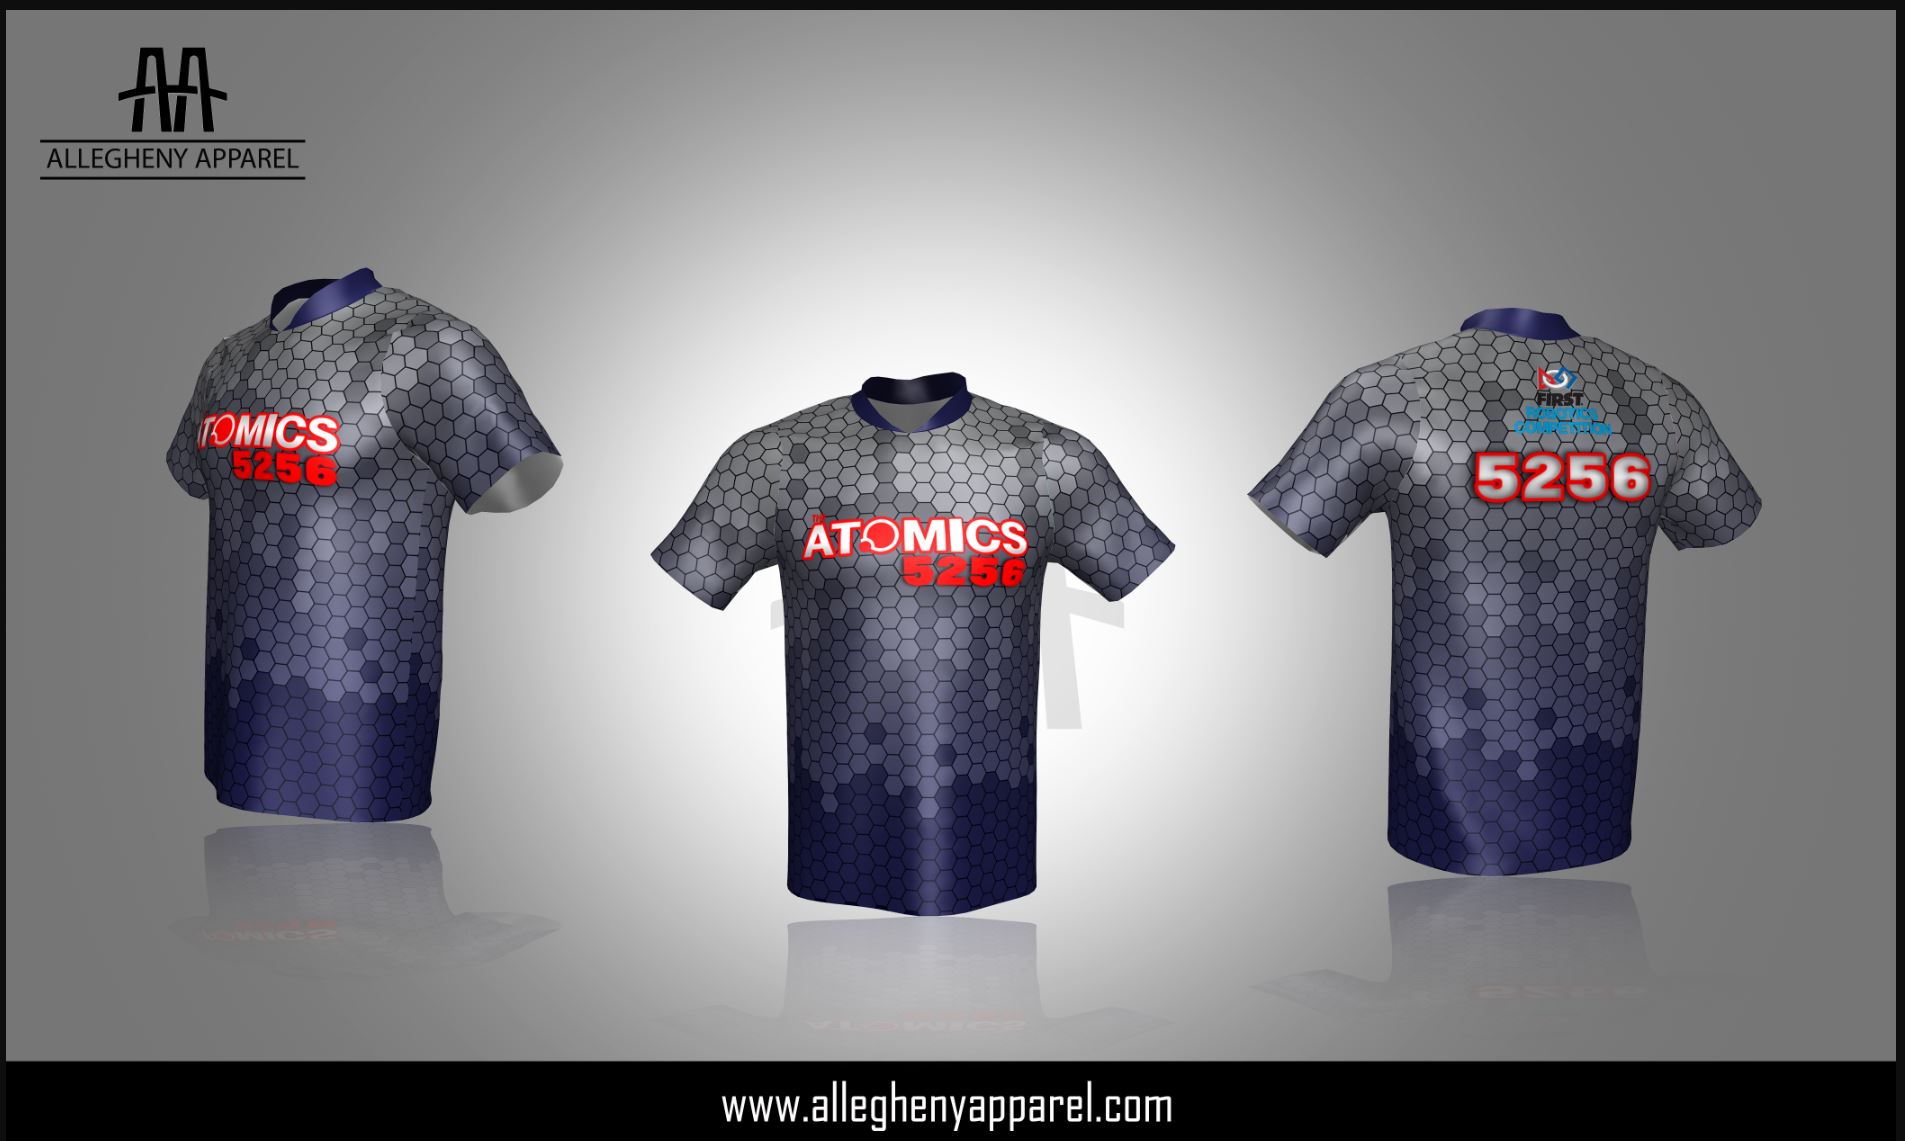 atomics jersey.JPG